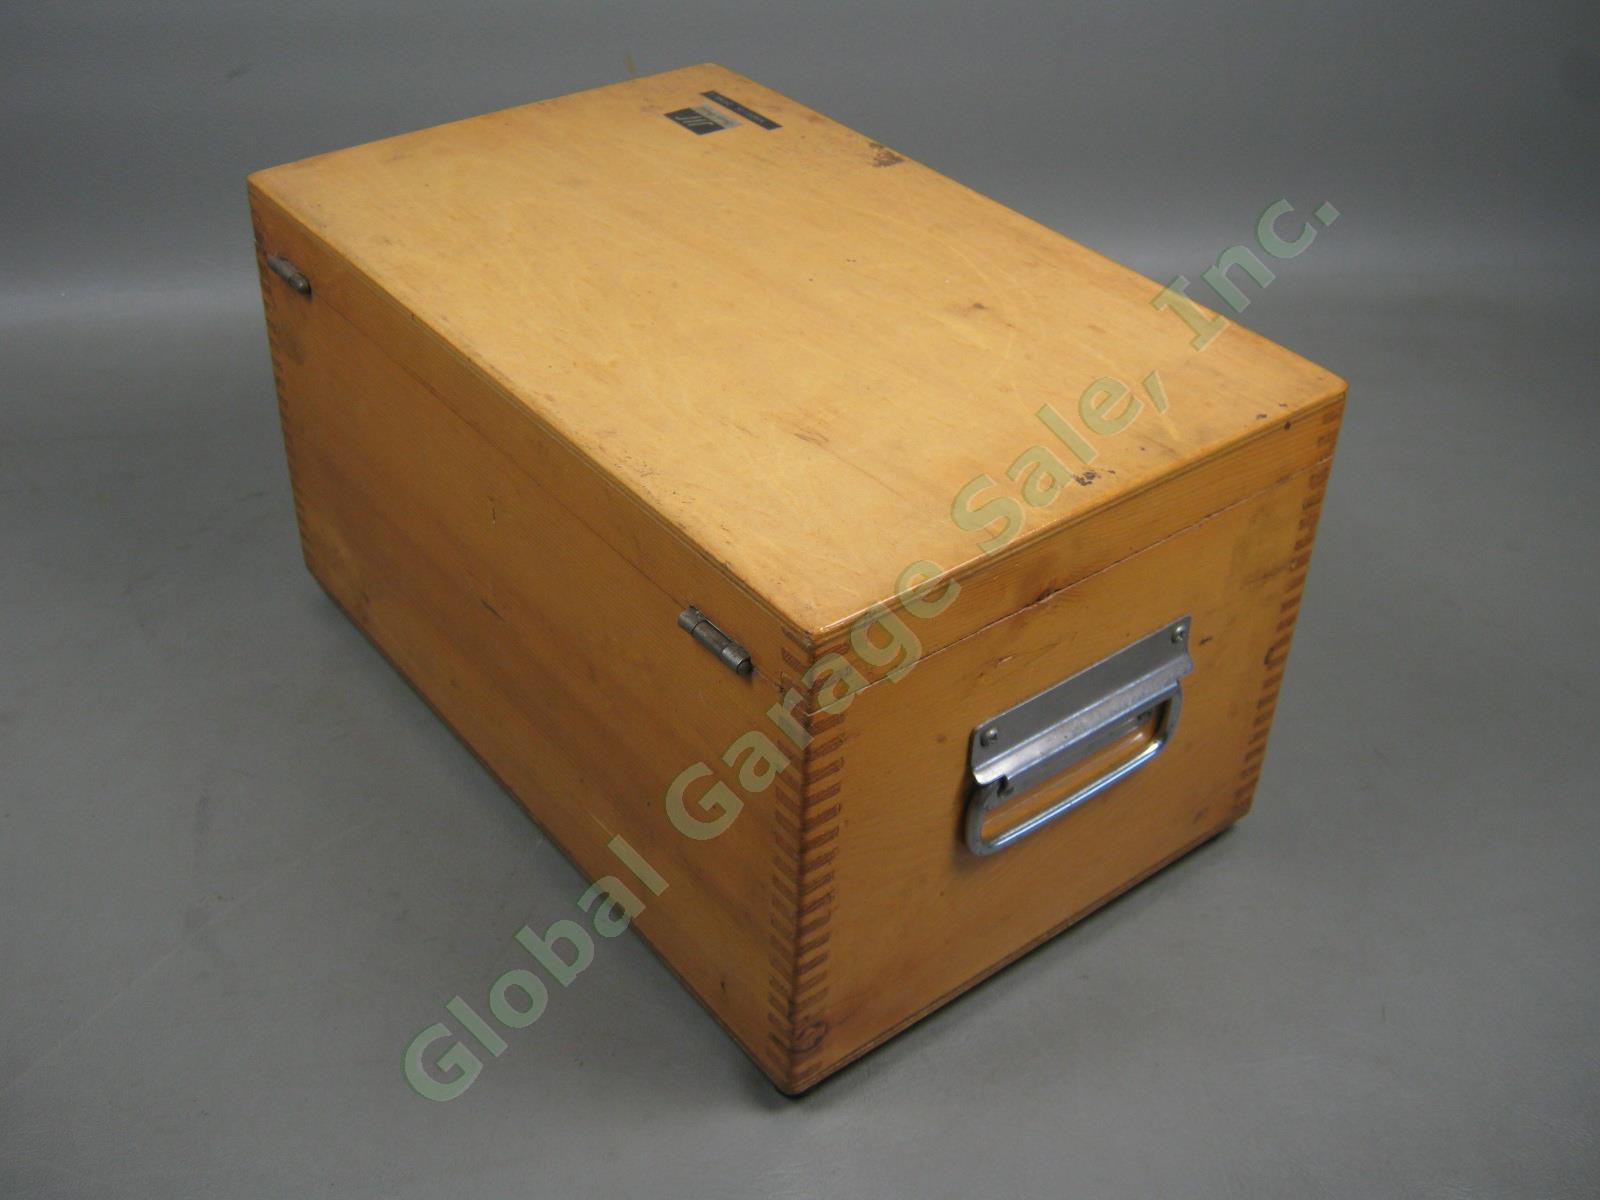 Chuan Brand Outside Micrometer Caliper Set 0-12" in W/ Wood Wooden Storage Case 6